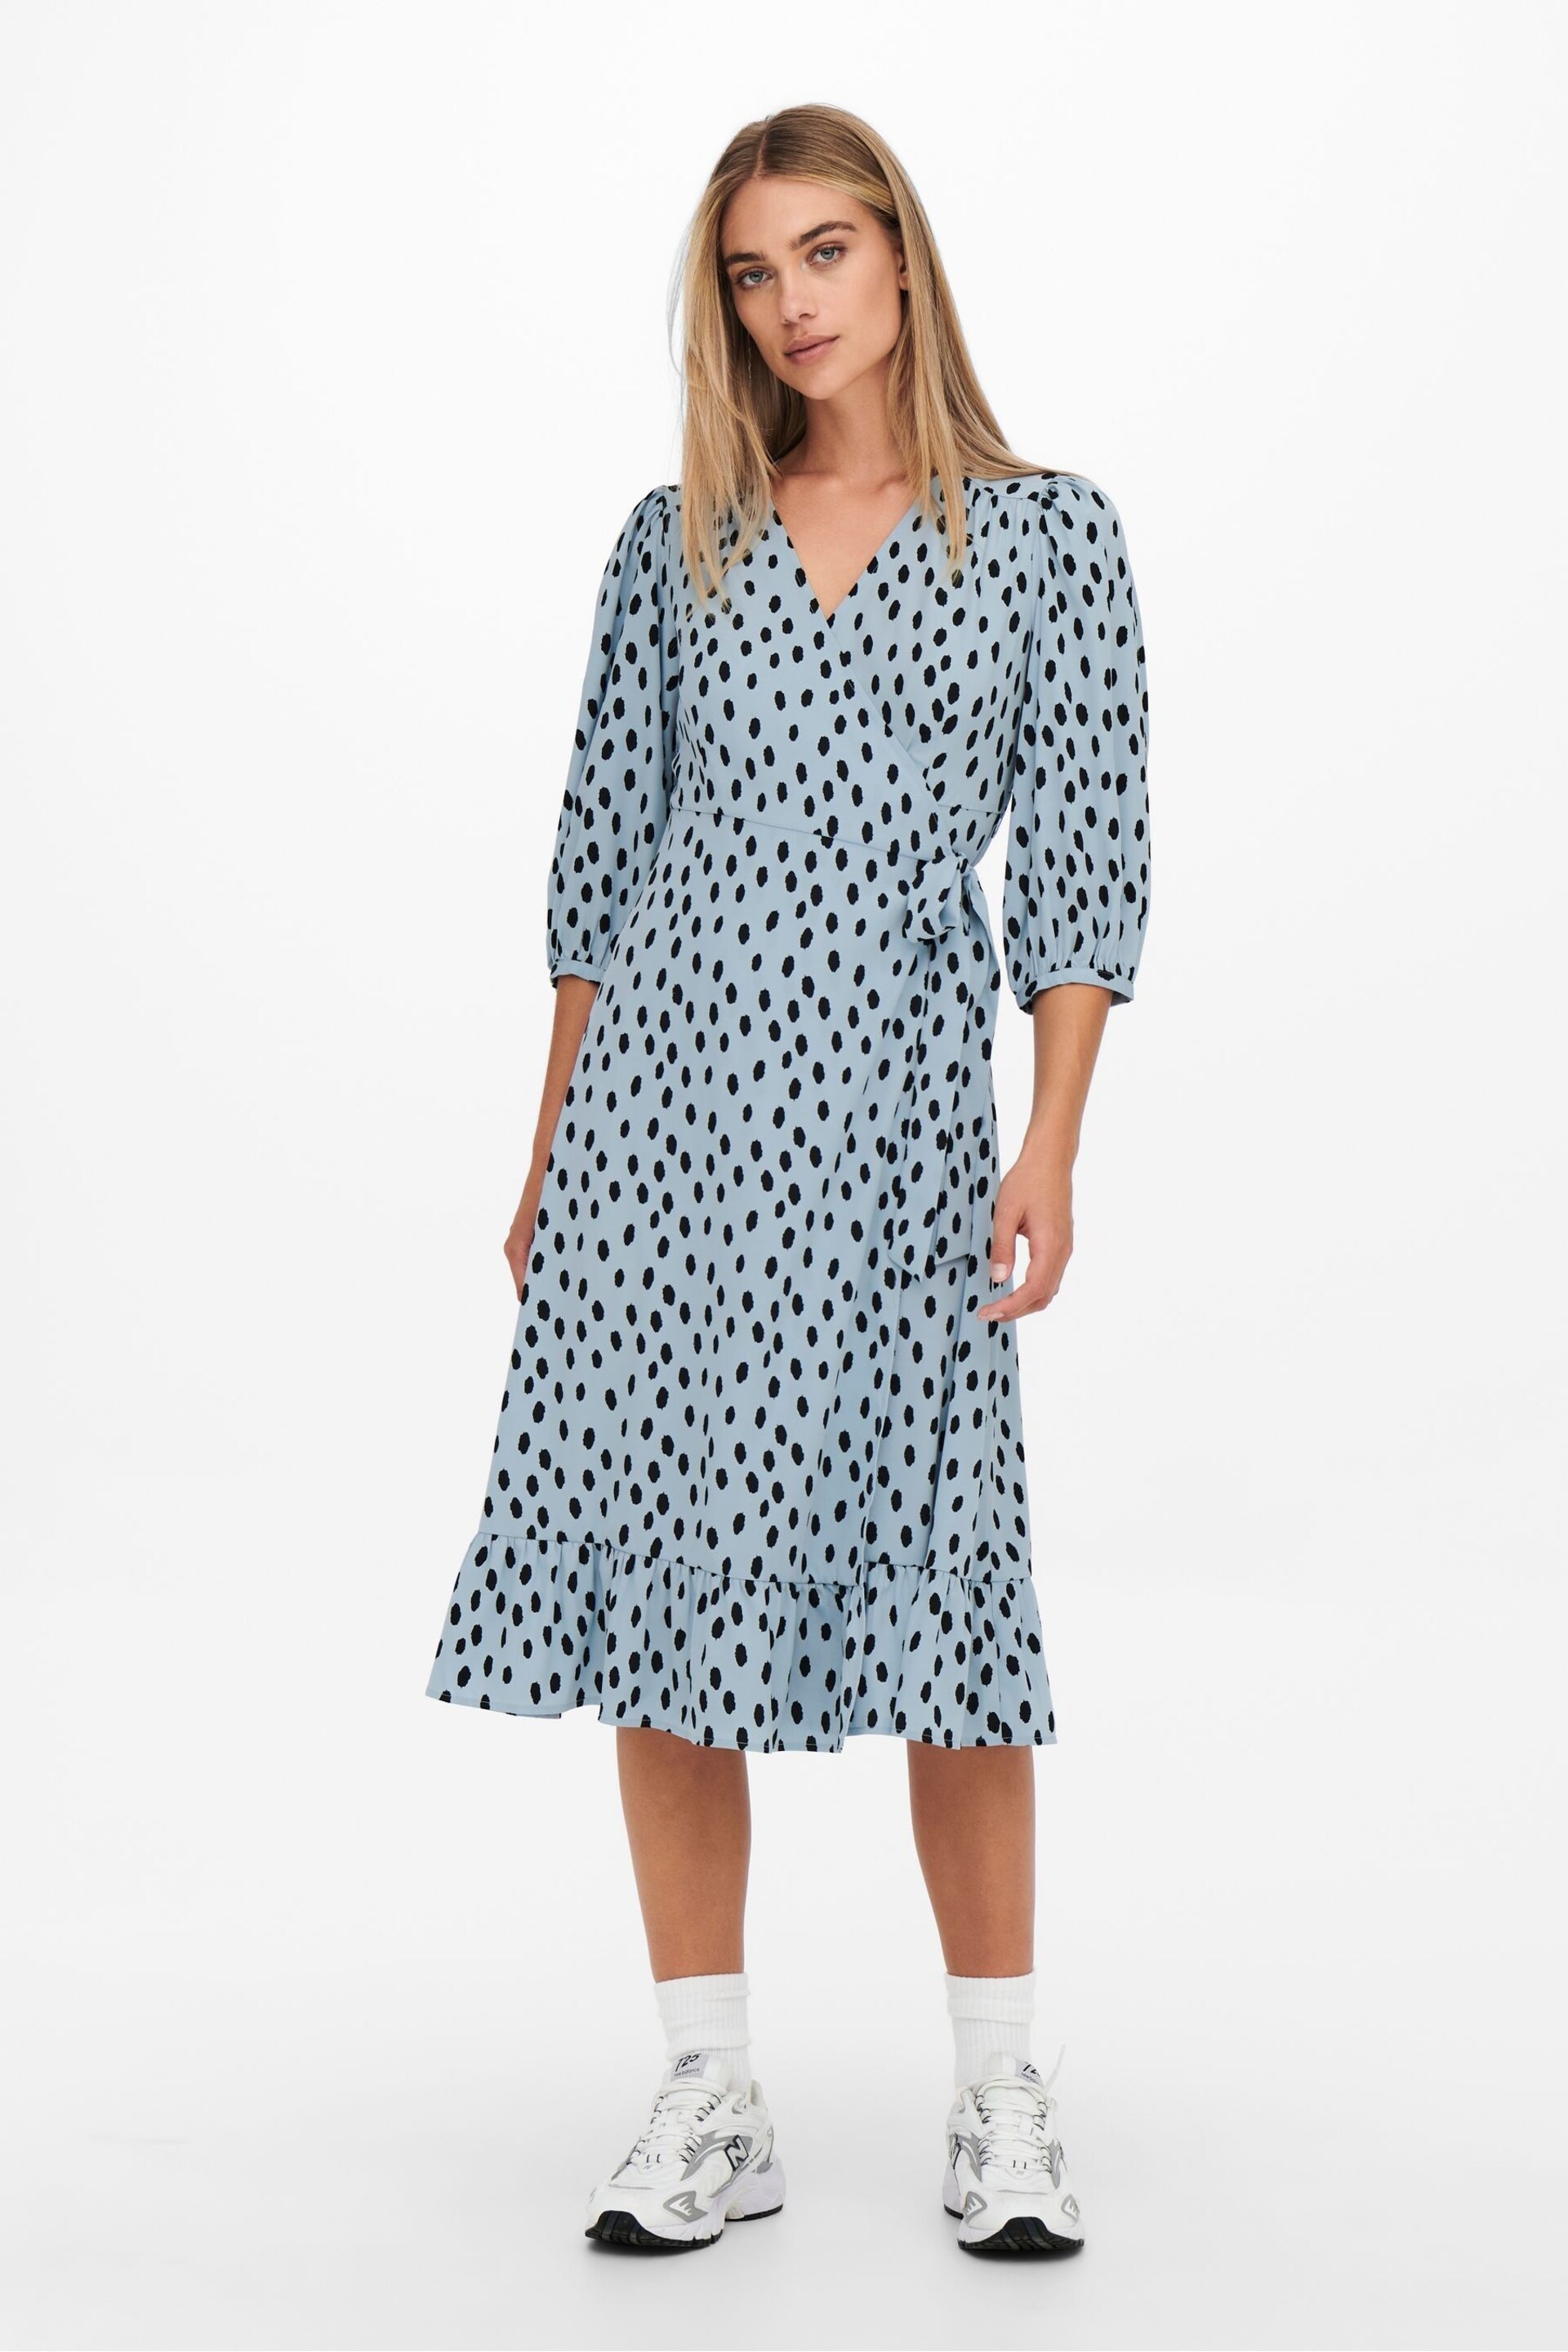 ONLY Blue Polka Dot Long Sleeve Wrap Midi Dress - Image 2 of 5